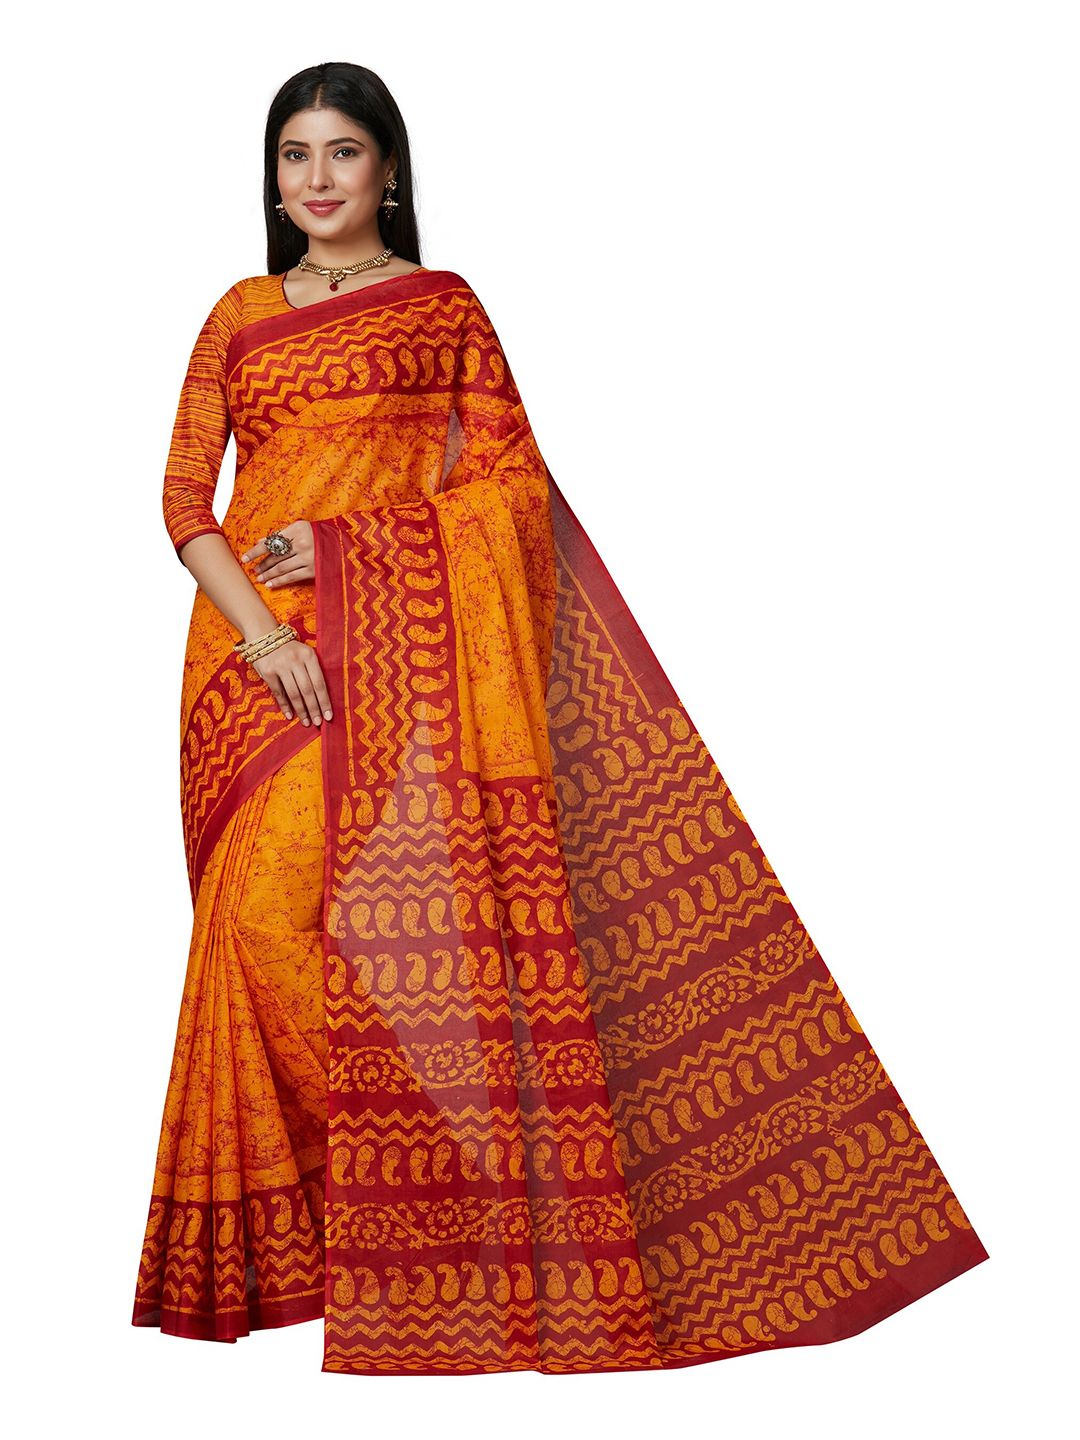 SHANVIKA Women Gold-Toned & Red Batik Pure Cotton Block Print Saree Price in India